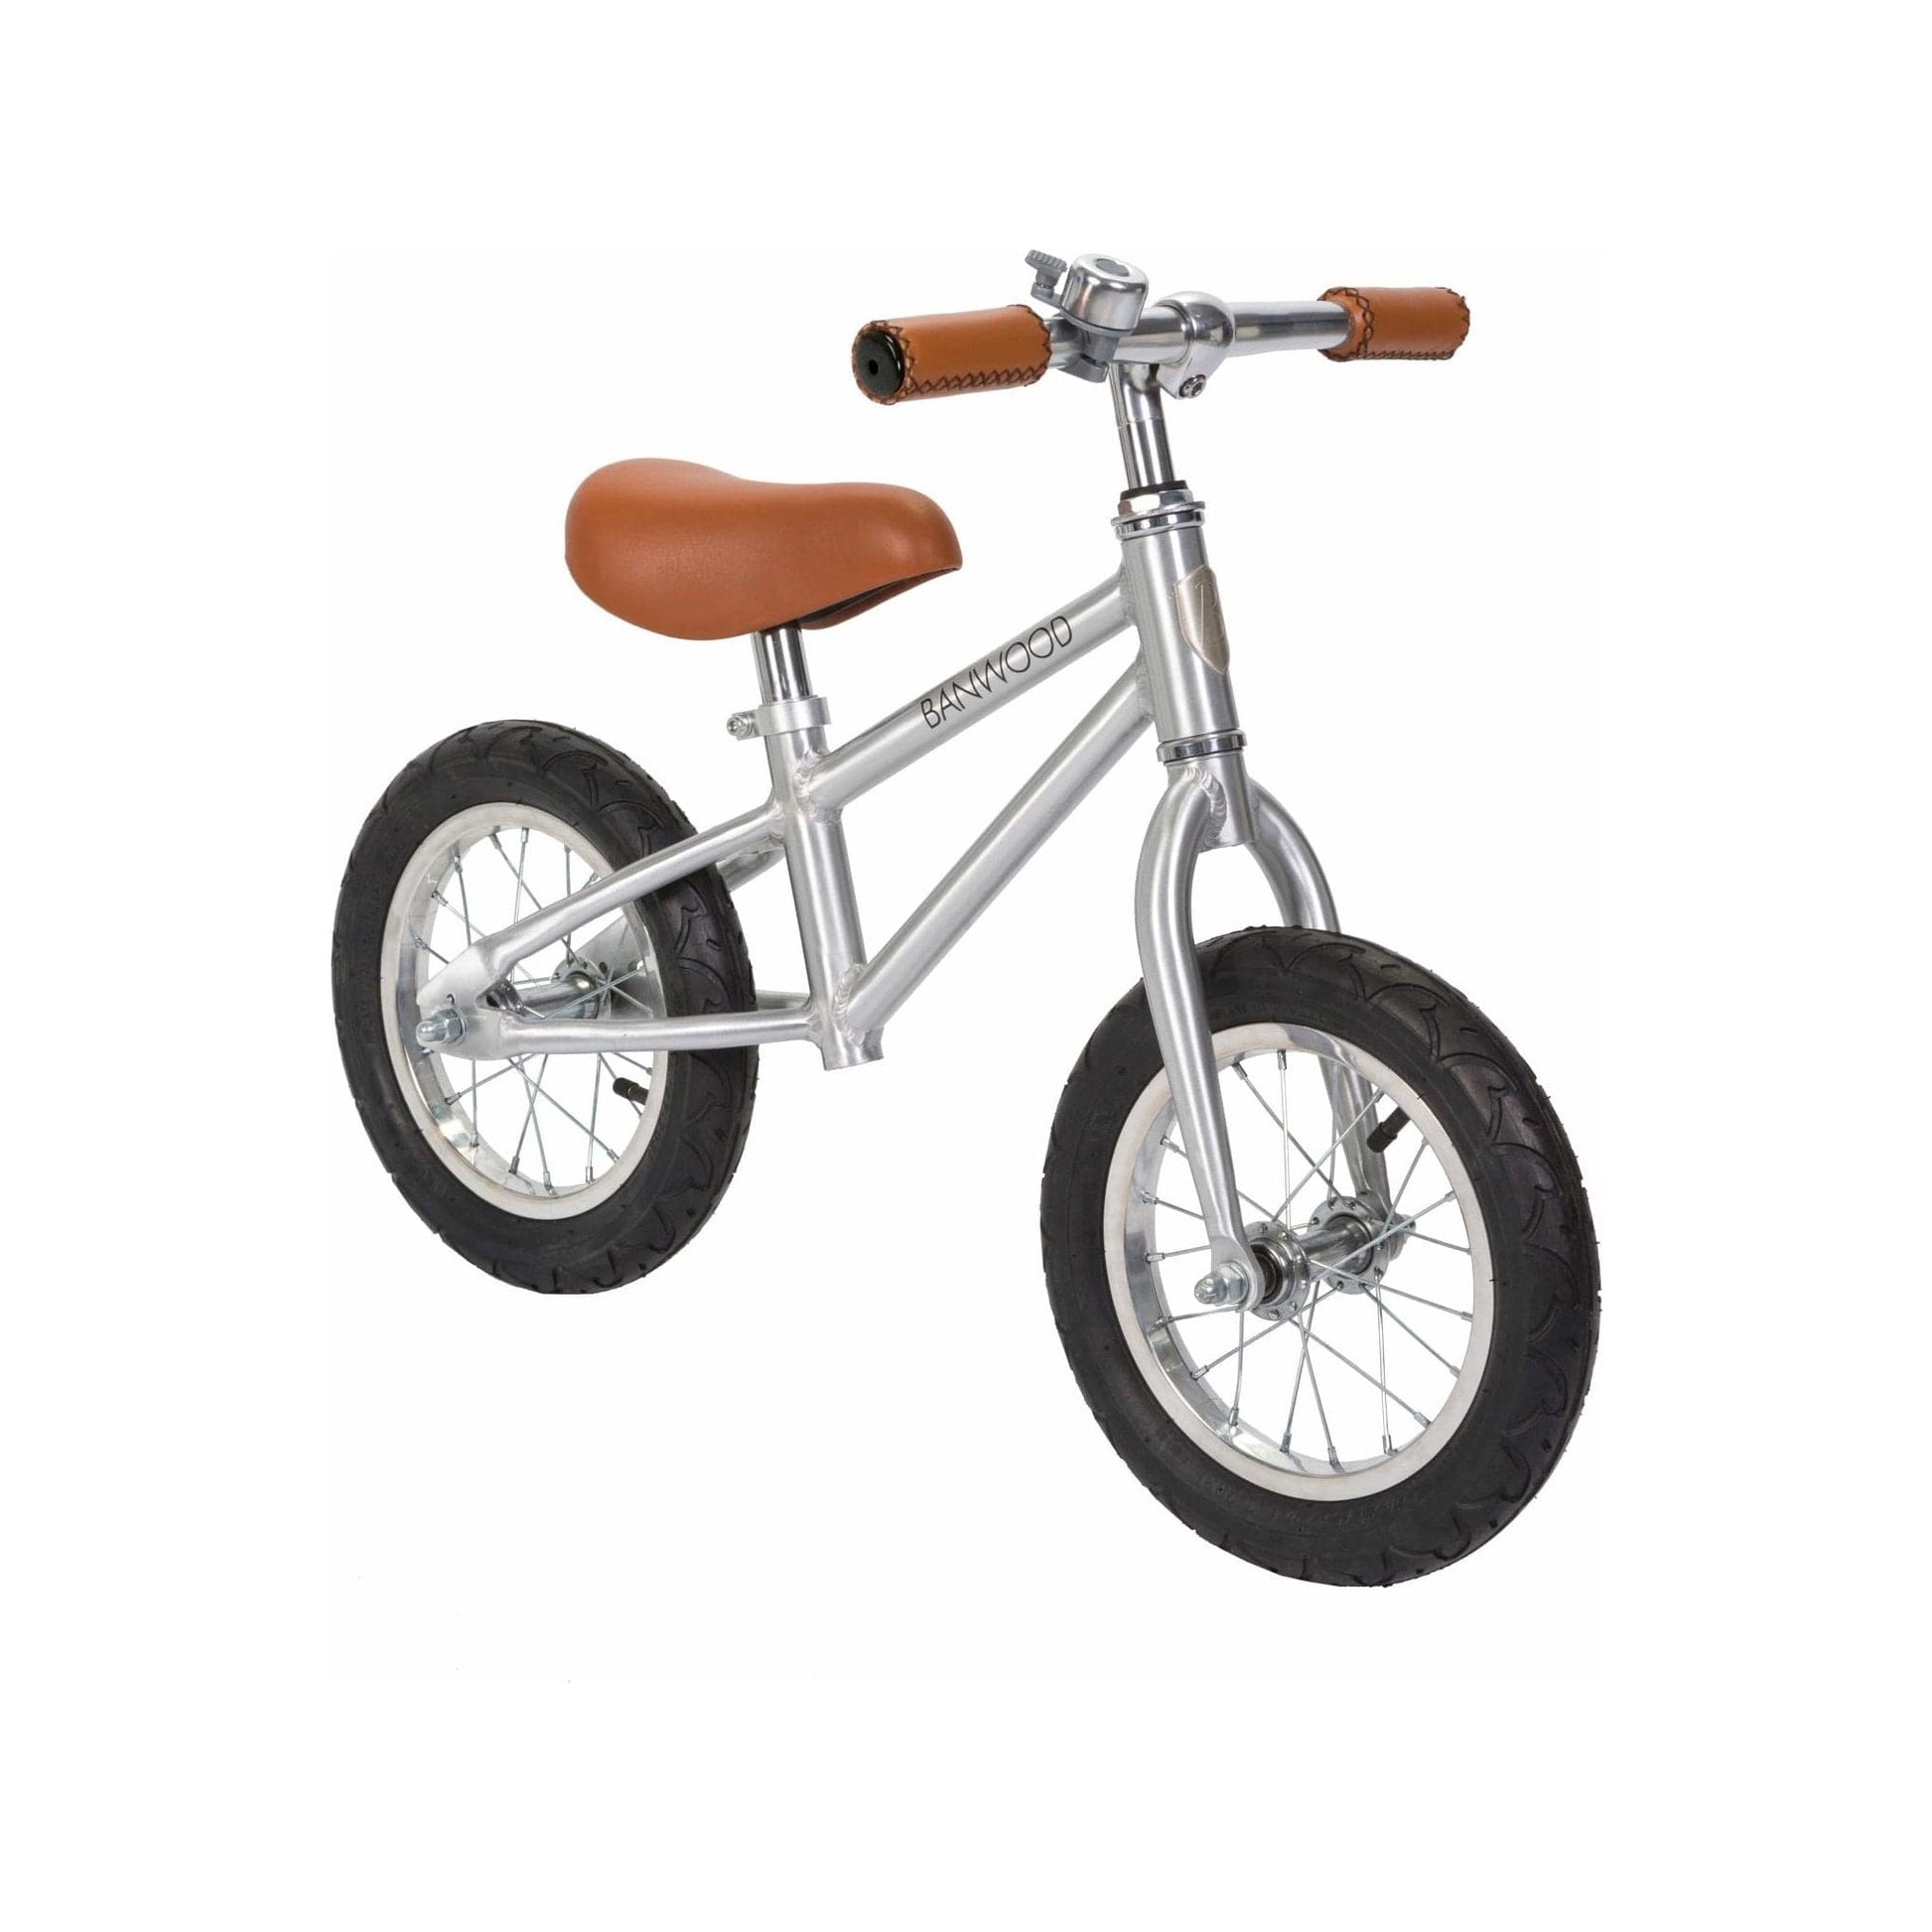 Banwood First Go Balance Bike - Age 3-5 - Chrome - The Online Toy Shop4